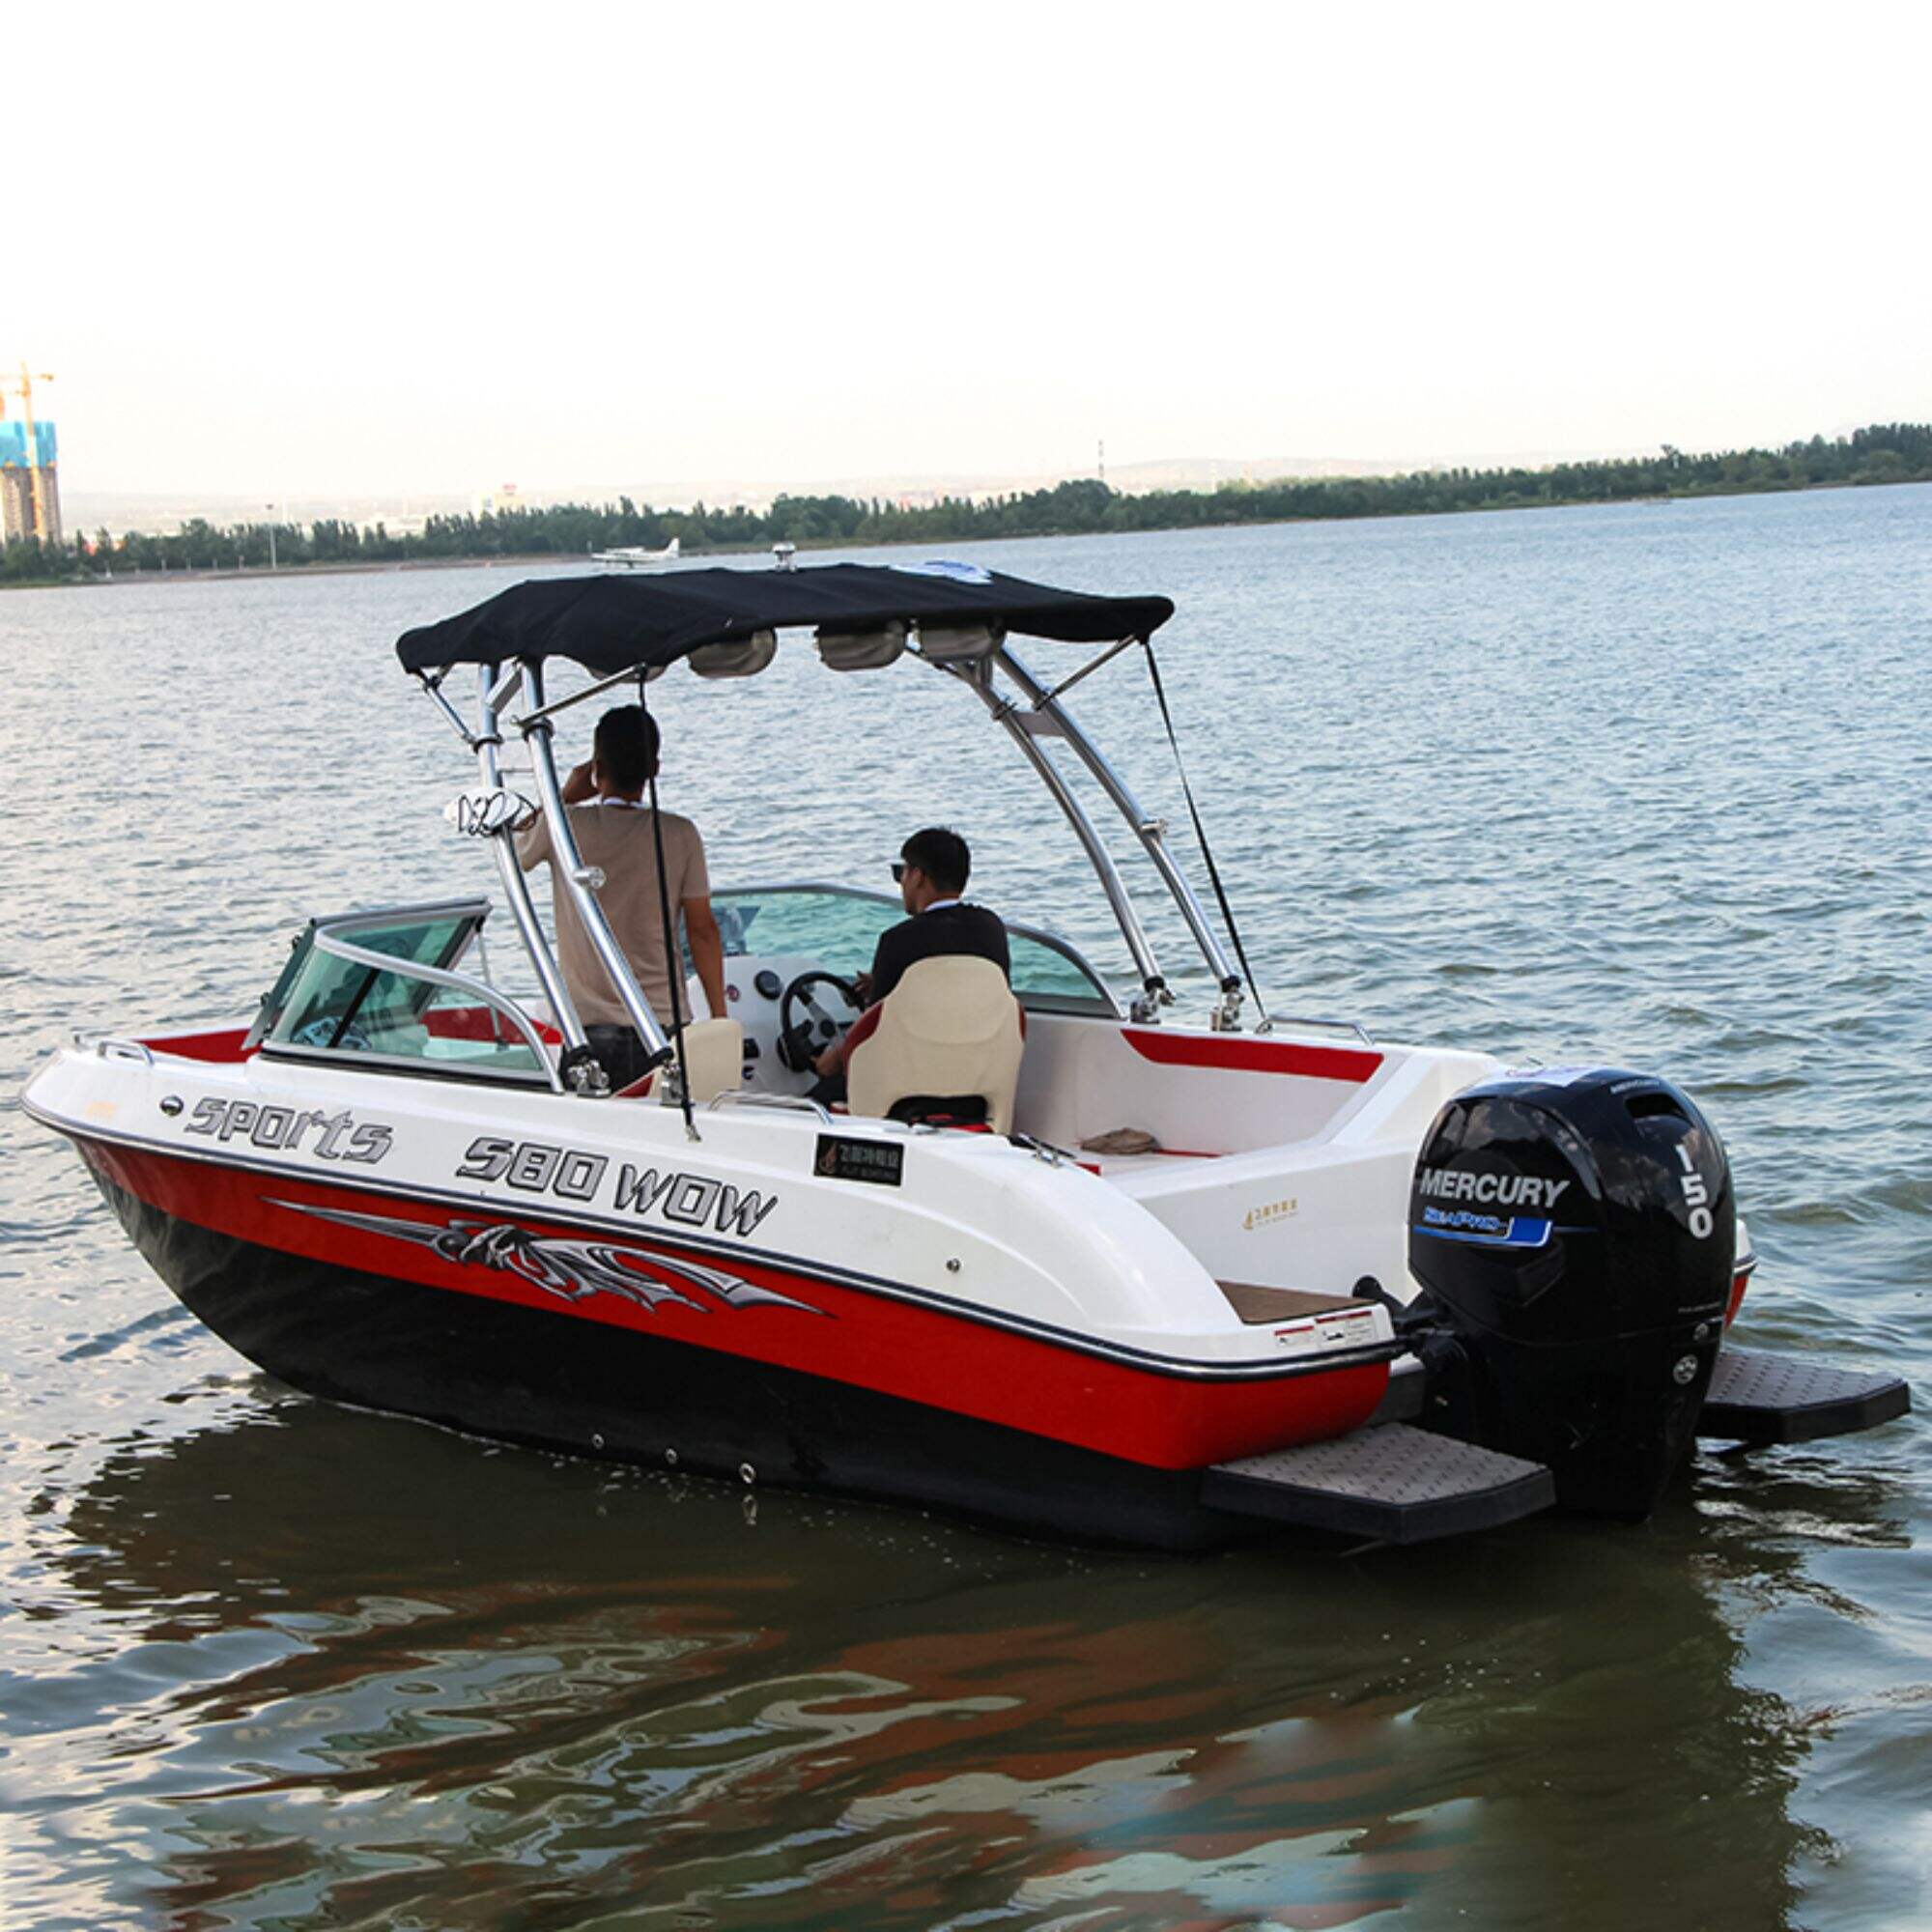 19ft fiberglass speed boat for 8 people